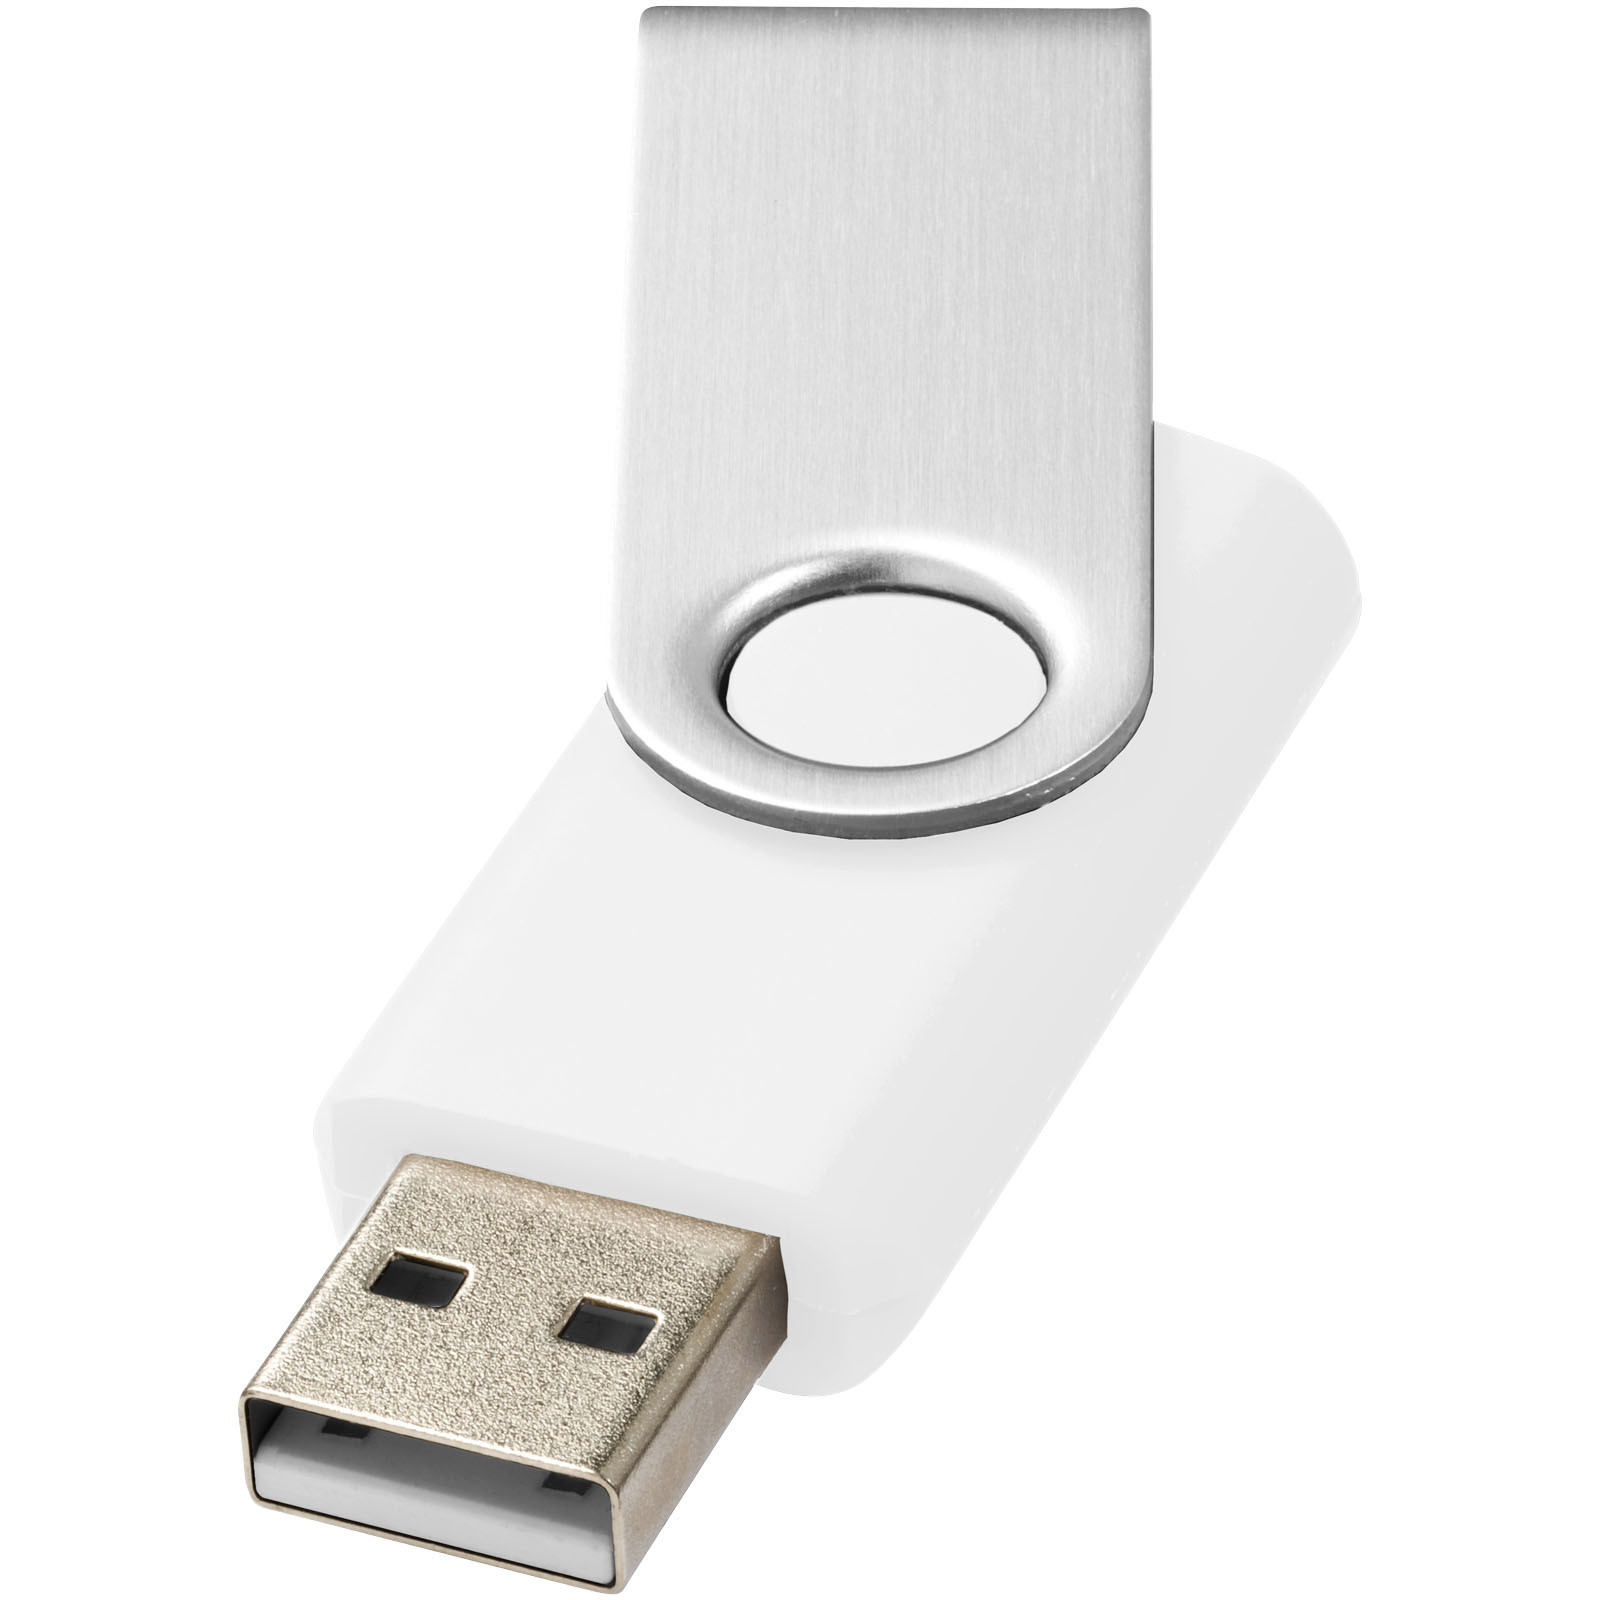 Chiavetta USB Rotate-basic da 4 GB